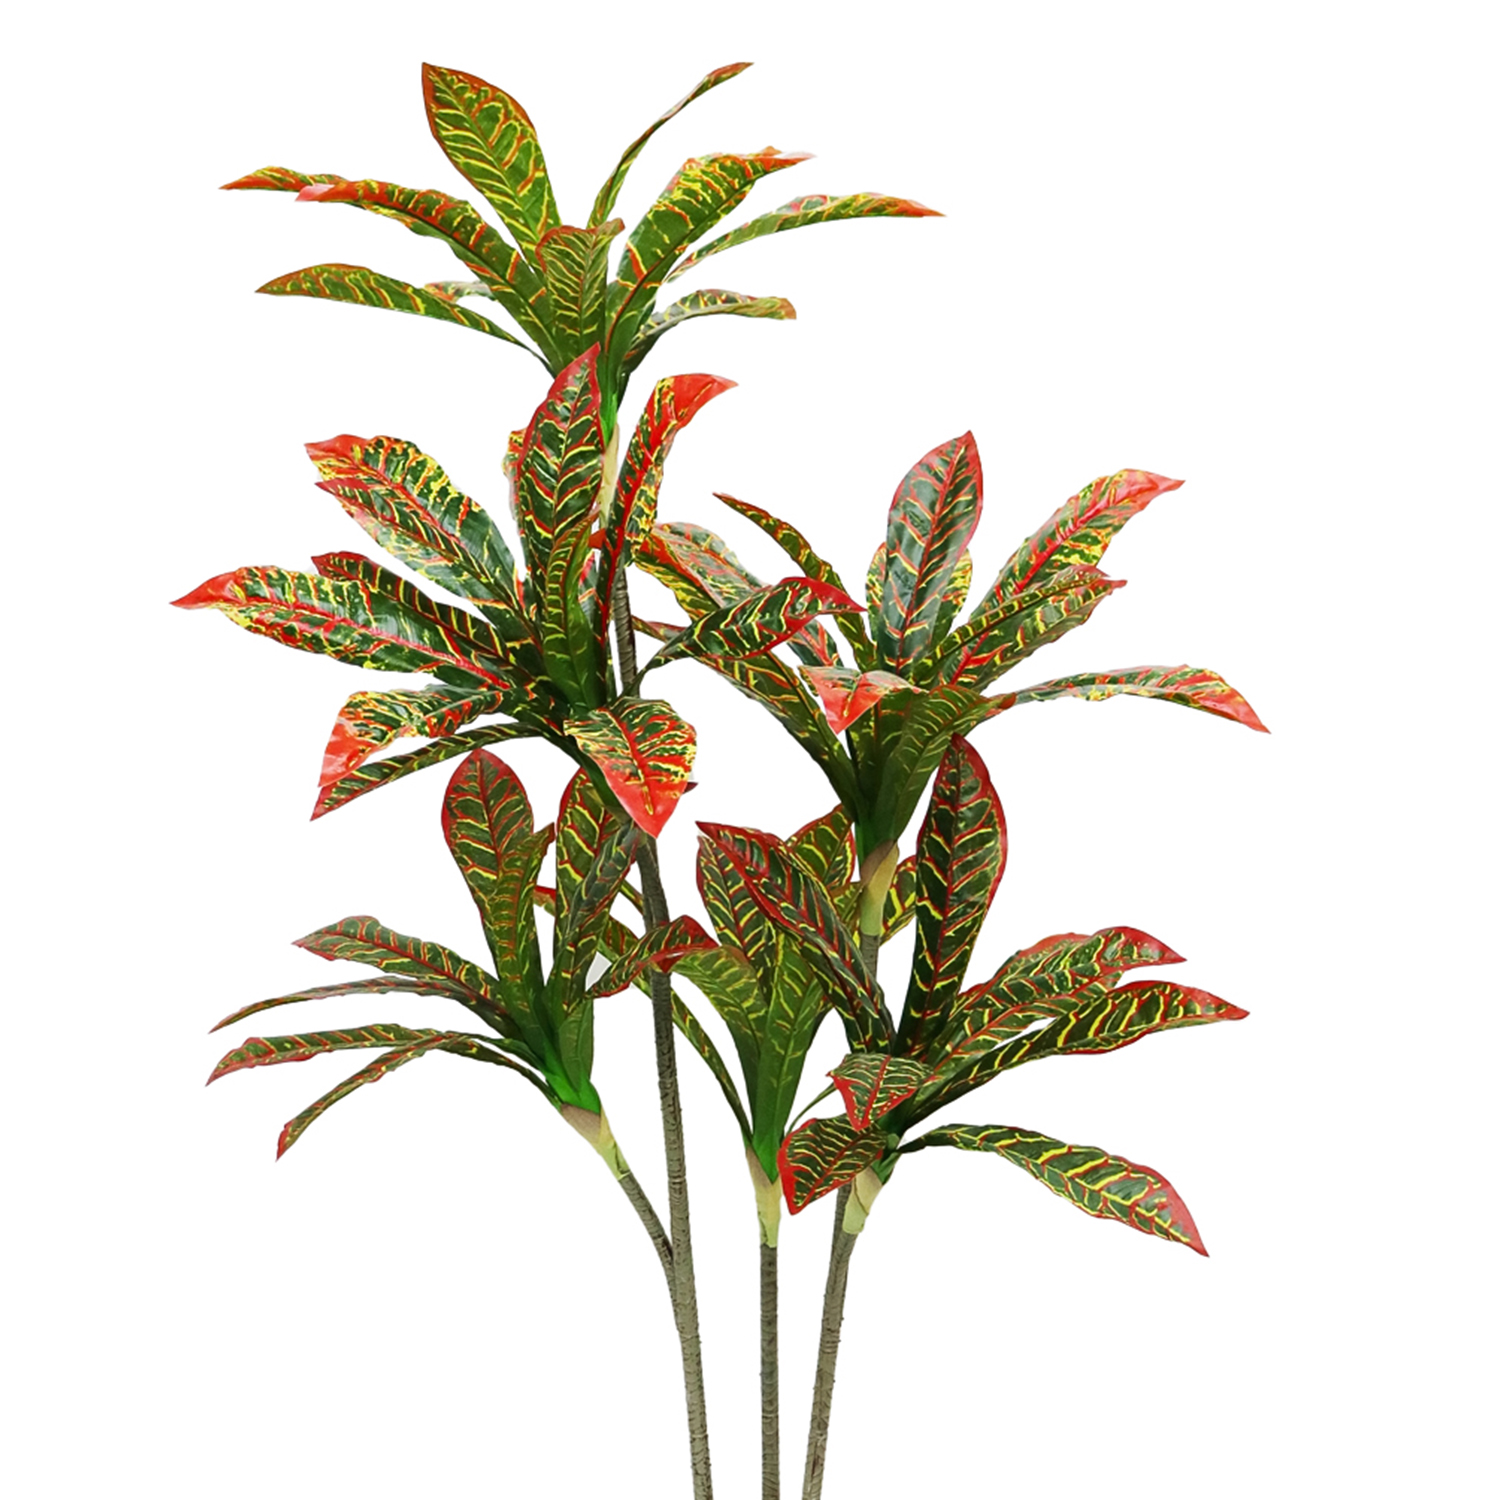 Planta artificiala, Dracaena fara ghiveci, D4268, 170cm, verde/rosu